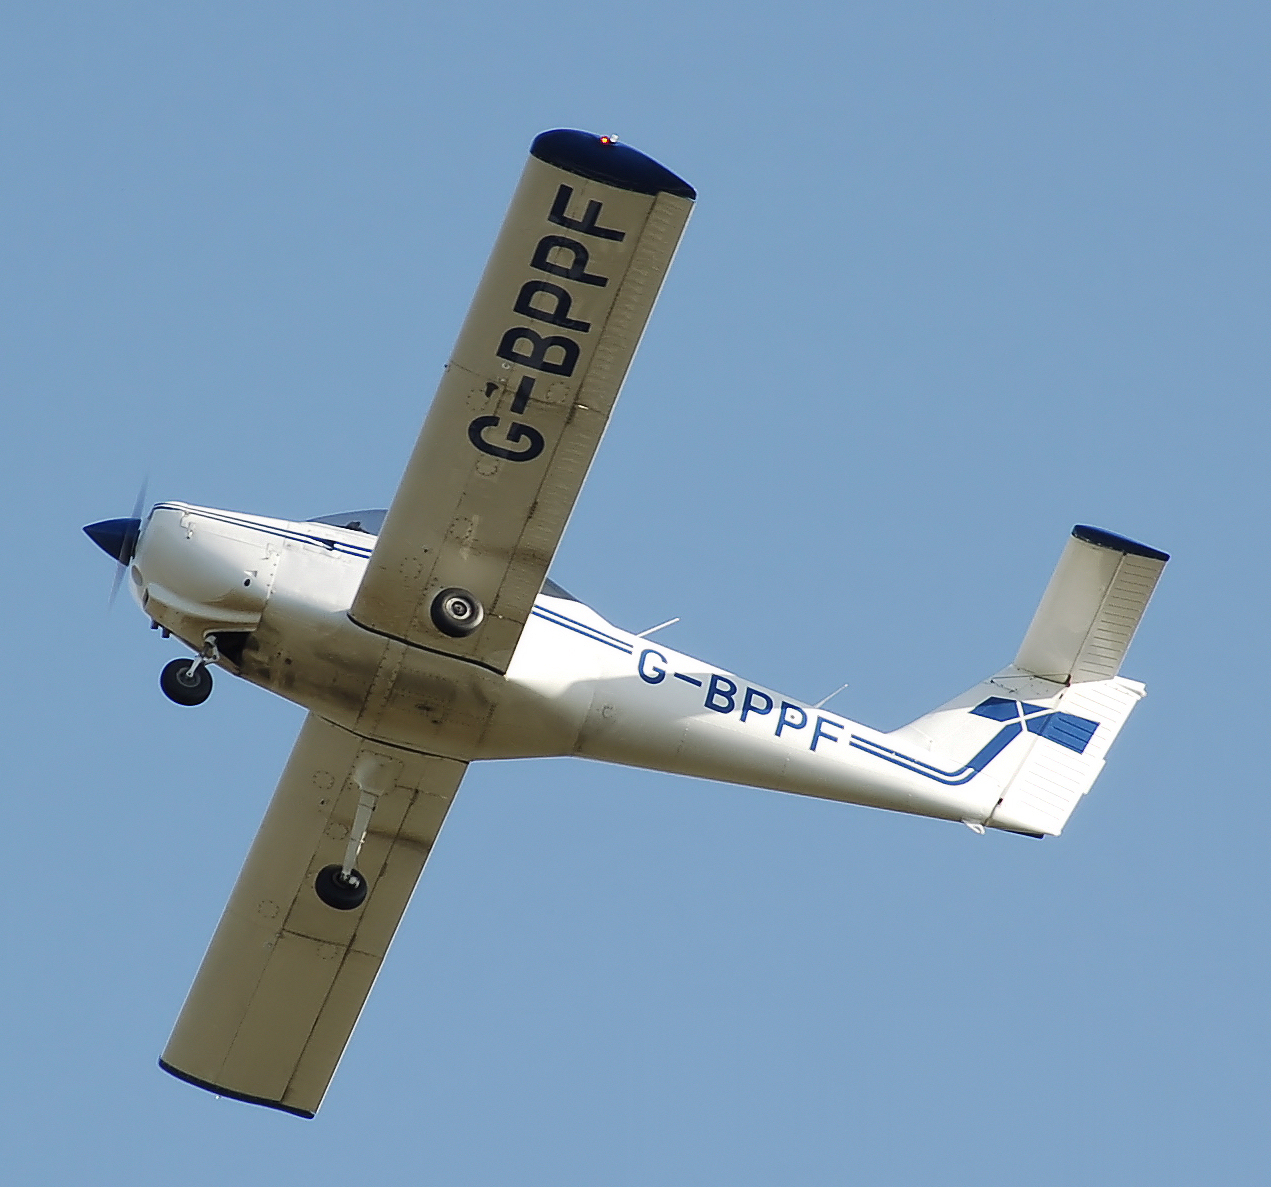 Piper PA-38 Tomahawk next